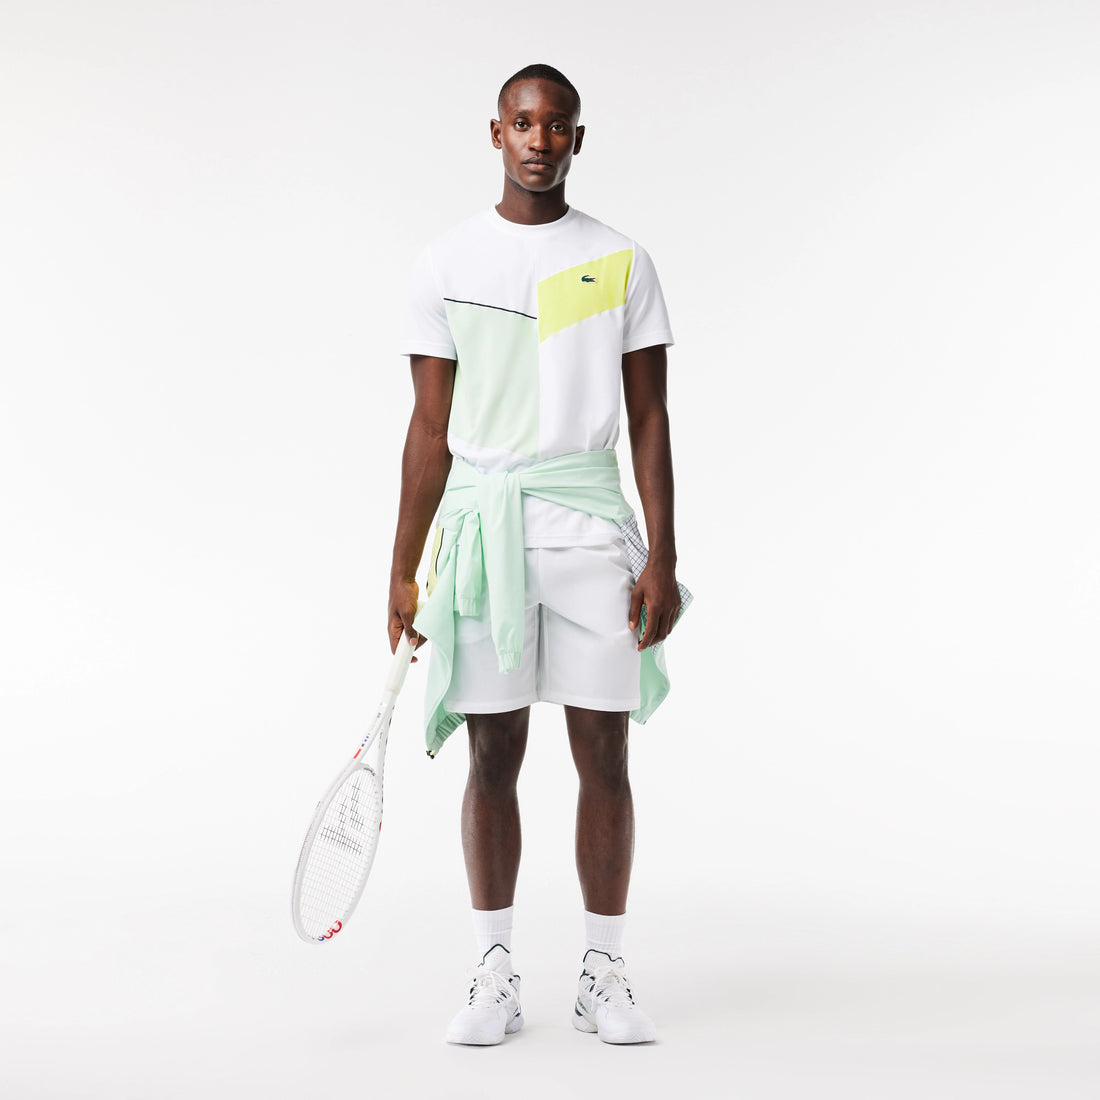 Tee-shirt tennis homme Nike Court Training - Collection Wimbledon